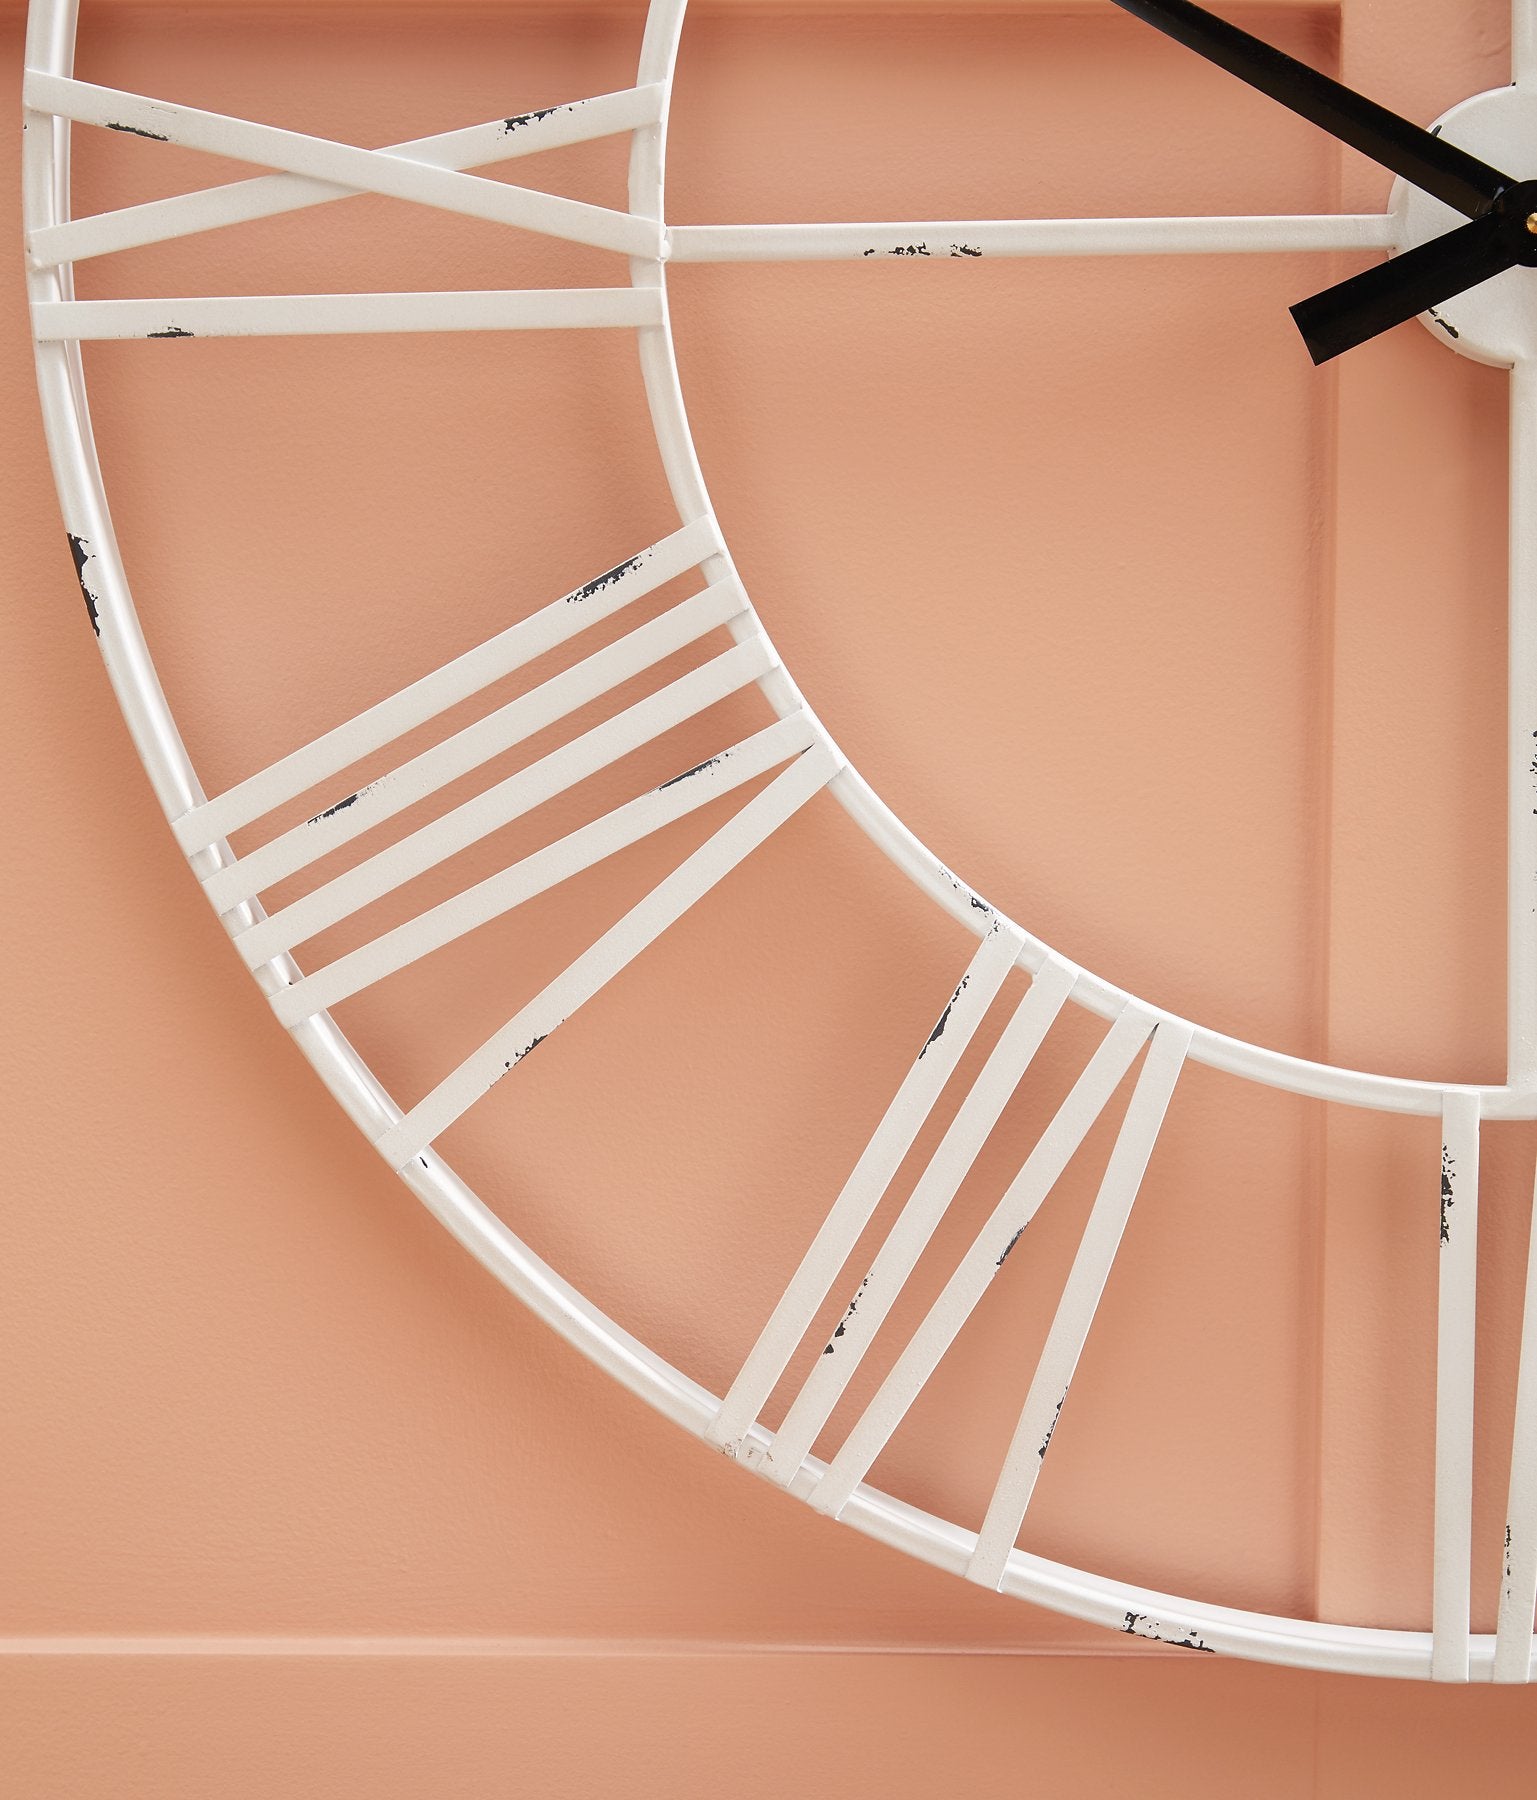 Paquita Wall Clock - Half Price Furniture